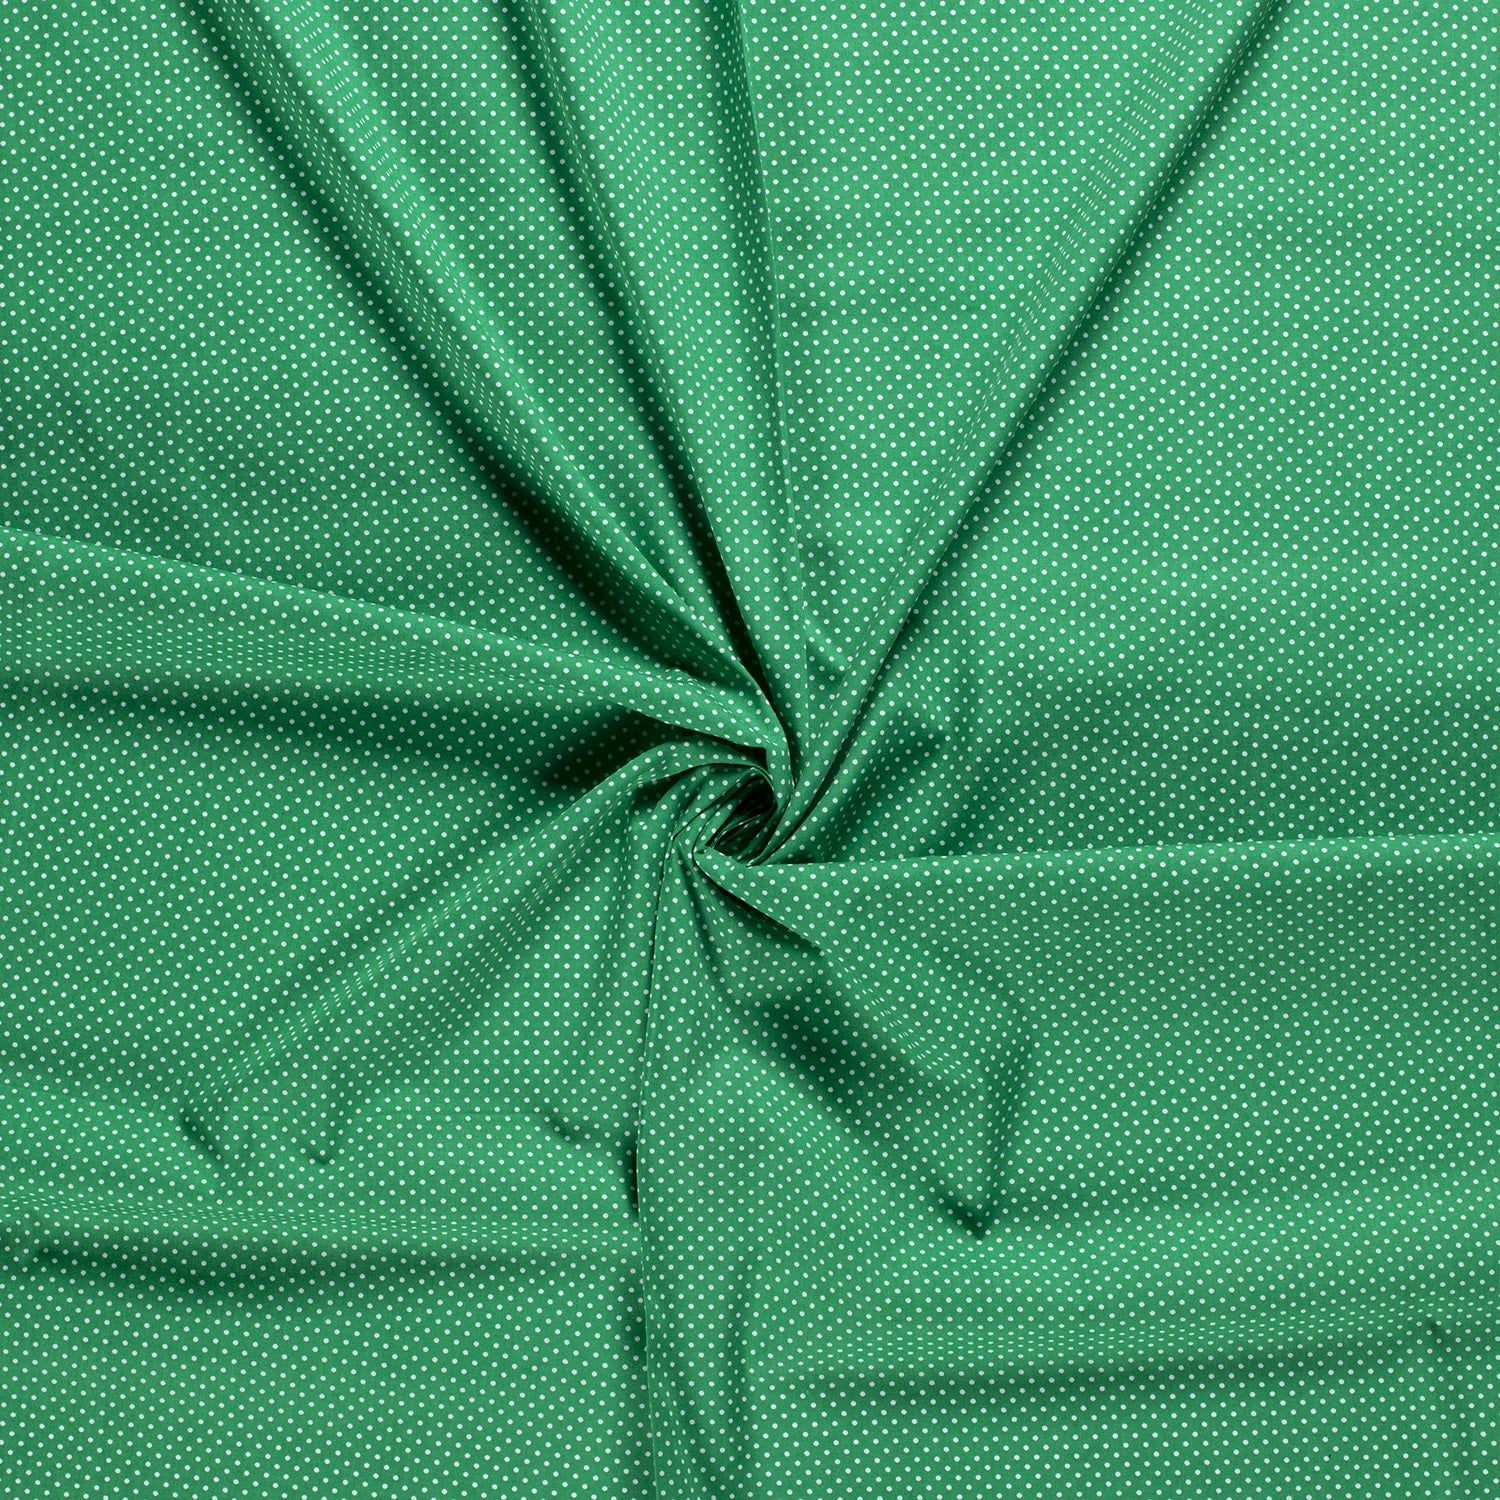 025 green